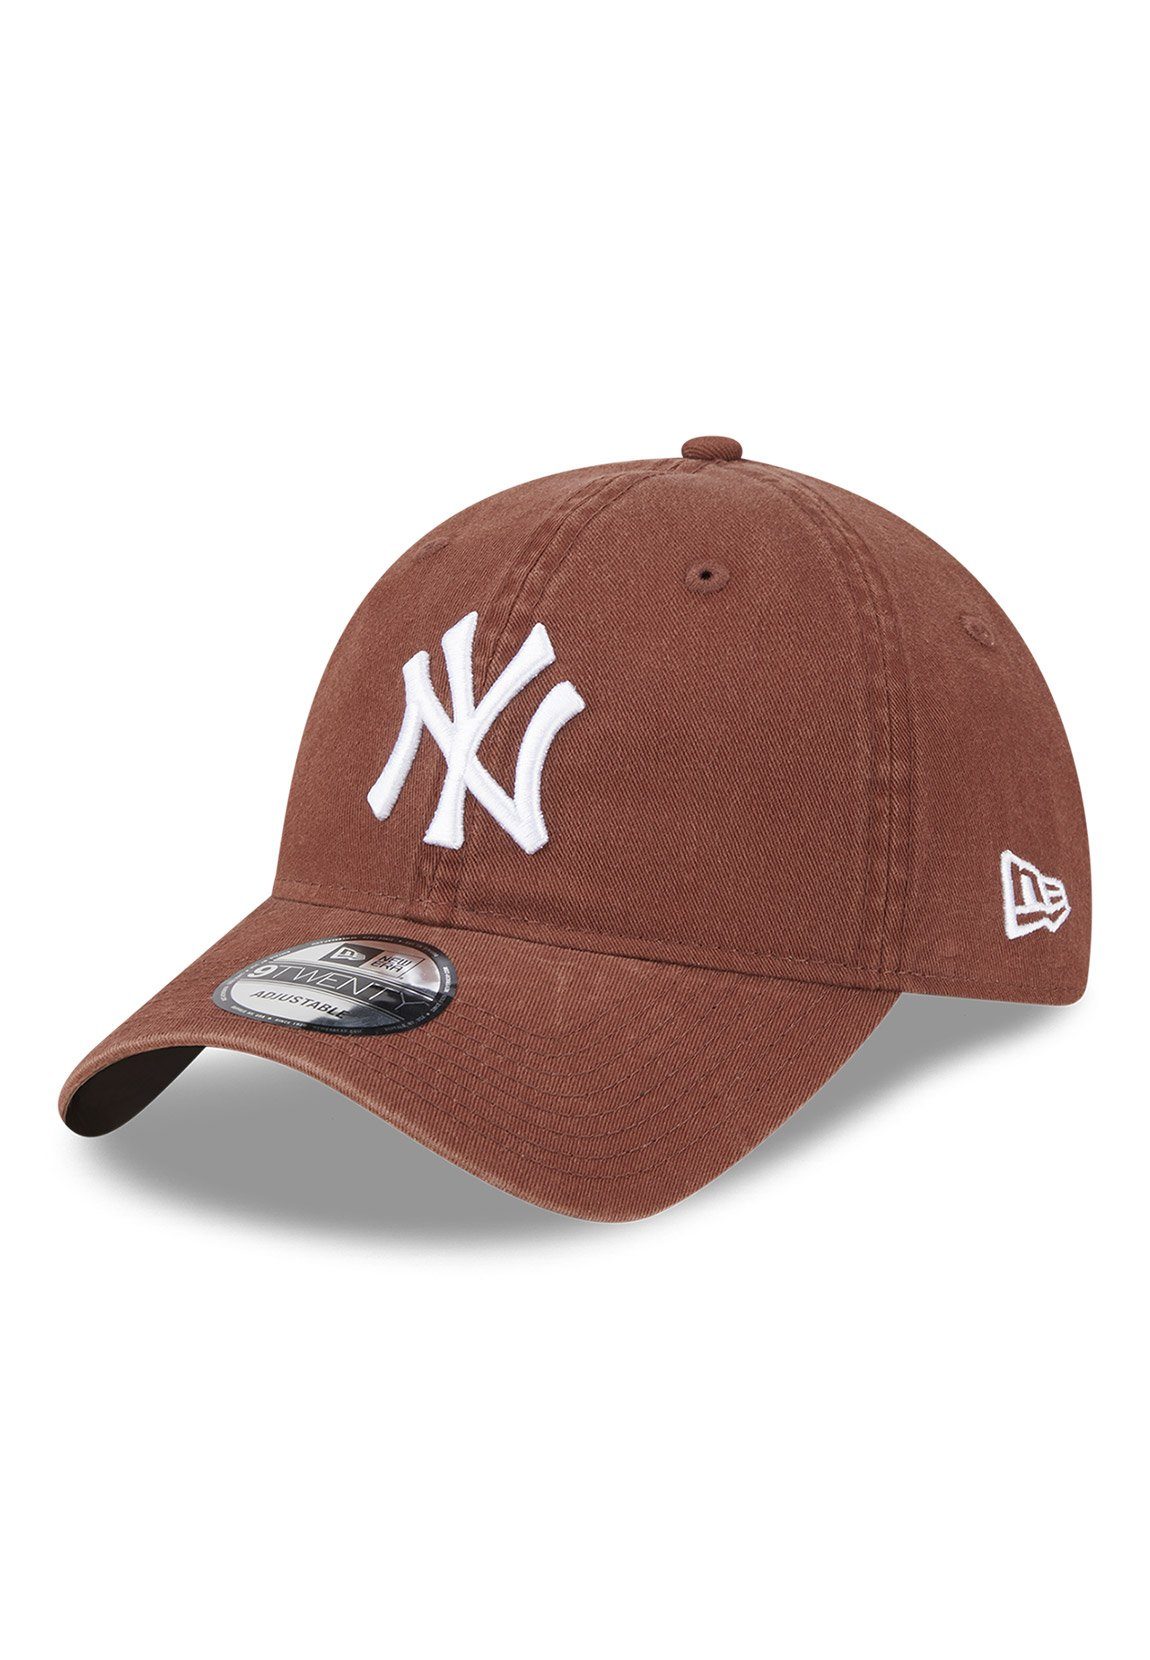 YANKEES Weiß Ess Era rost Cap League Baseball Cap Adjustable New NY 9Twenty Braun Era New